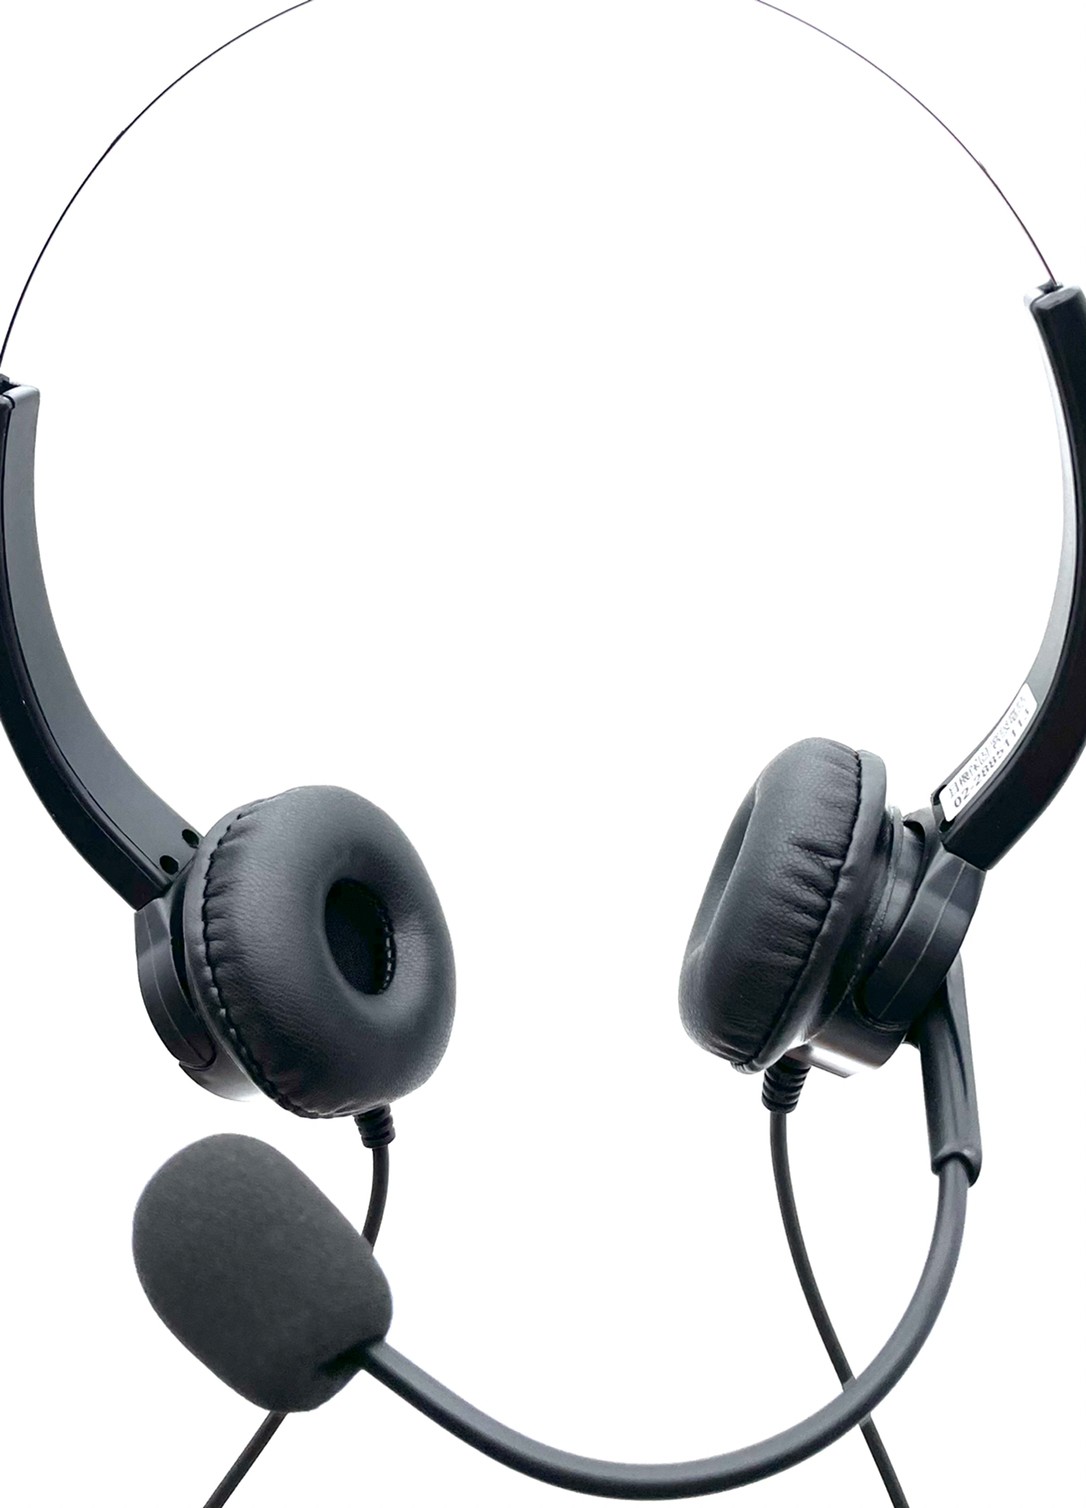 雙耳1100耳機 聯盟電話耳機麥克風 LINEMEX UDF12TD ISDK-8TS ISDK-12TD DT300 SERIES UD-K816 ISDK-4TD 辦公室電話耳機 總機電話耳機 客服電話耳機 HEADSET PHONNE